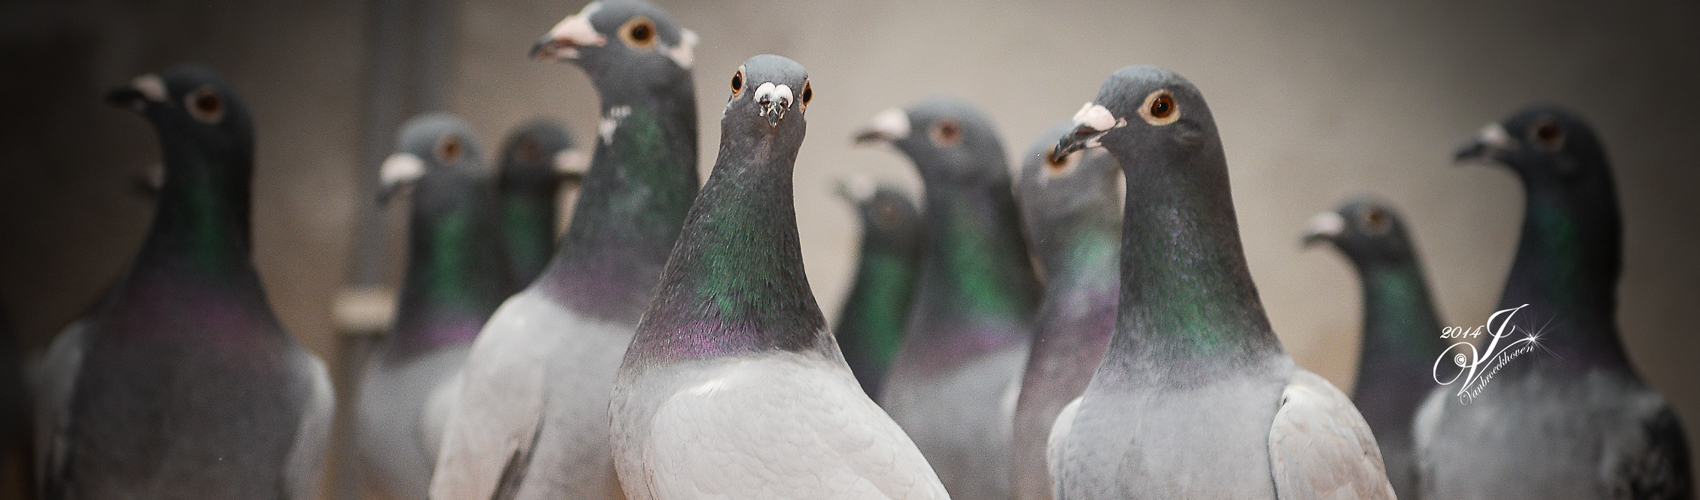 Royal Pigeon Photography